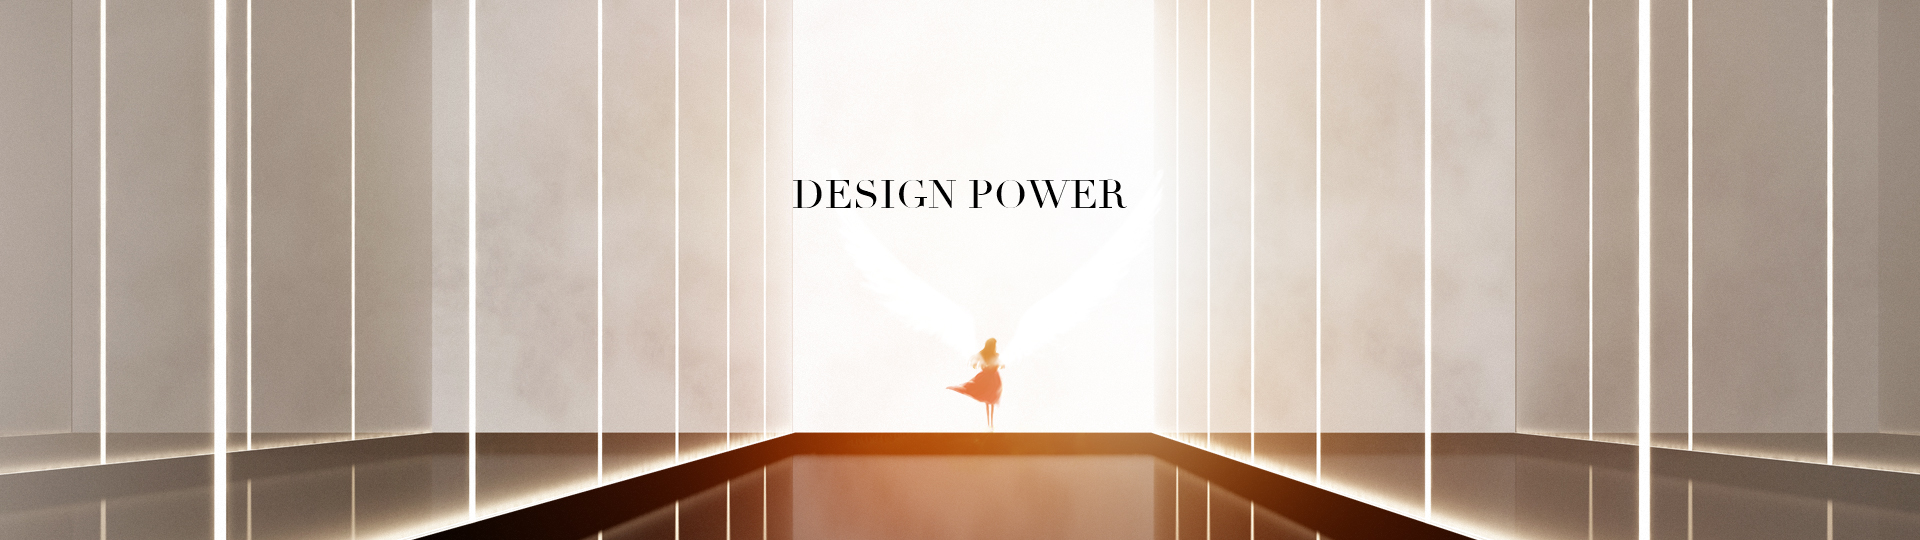 Design power